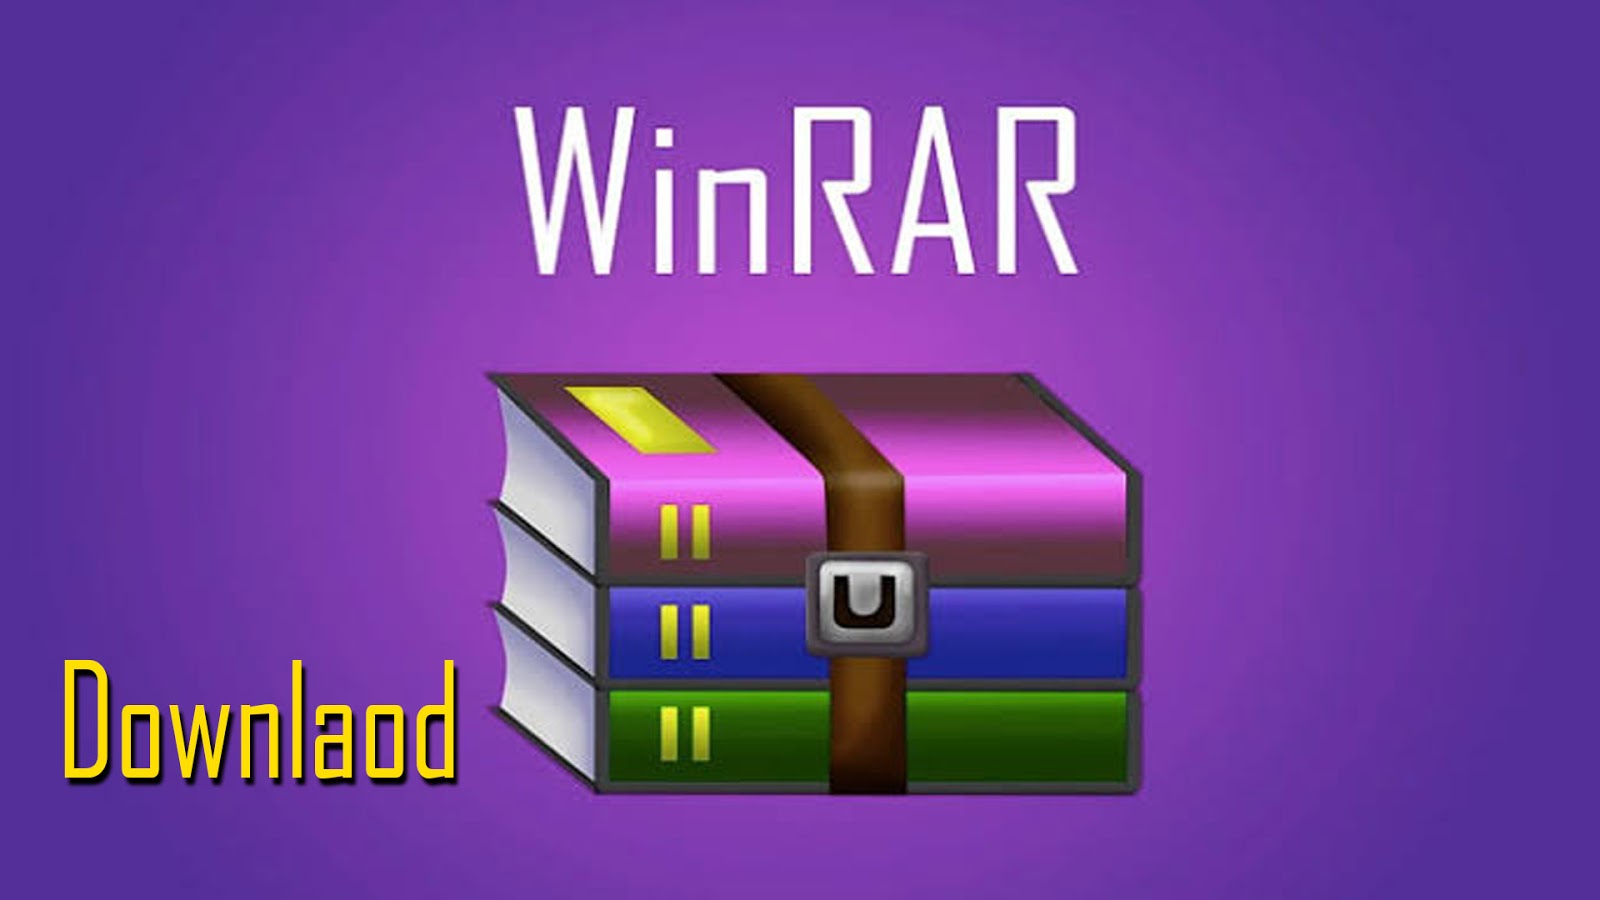 winrar 5.20 64 bit free download